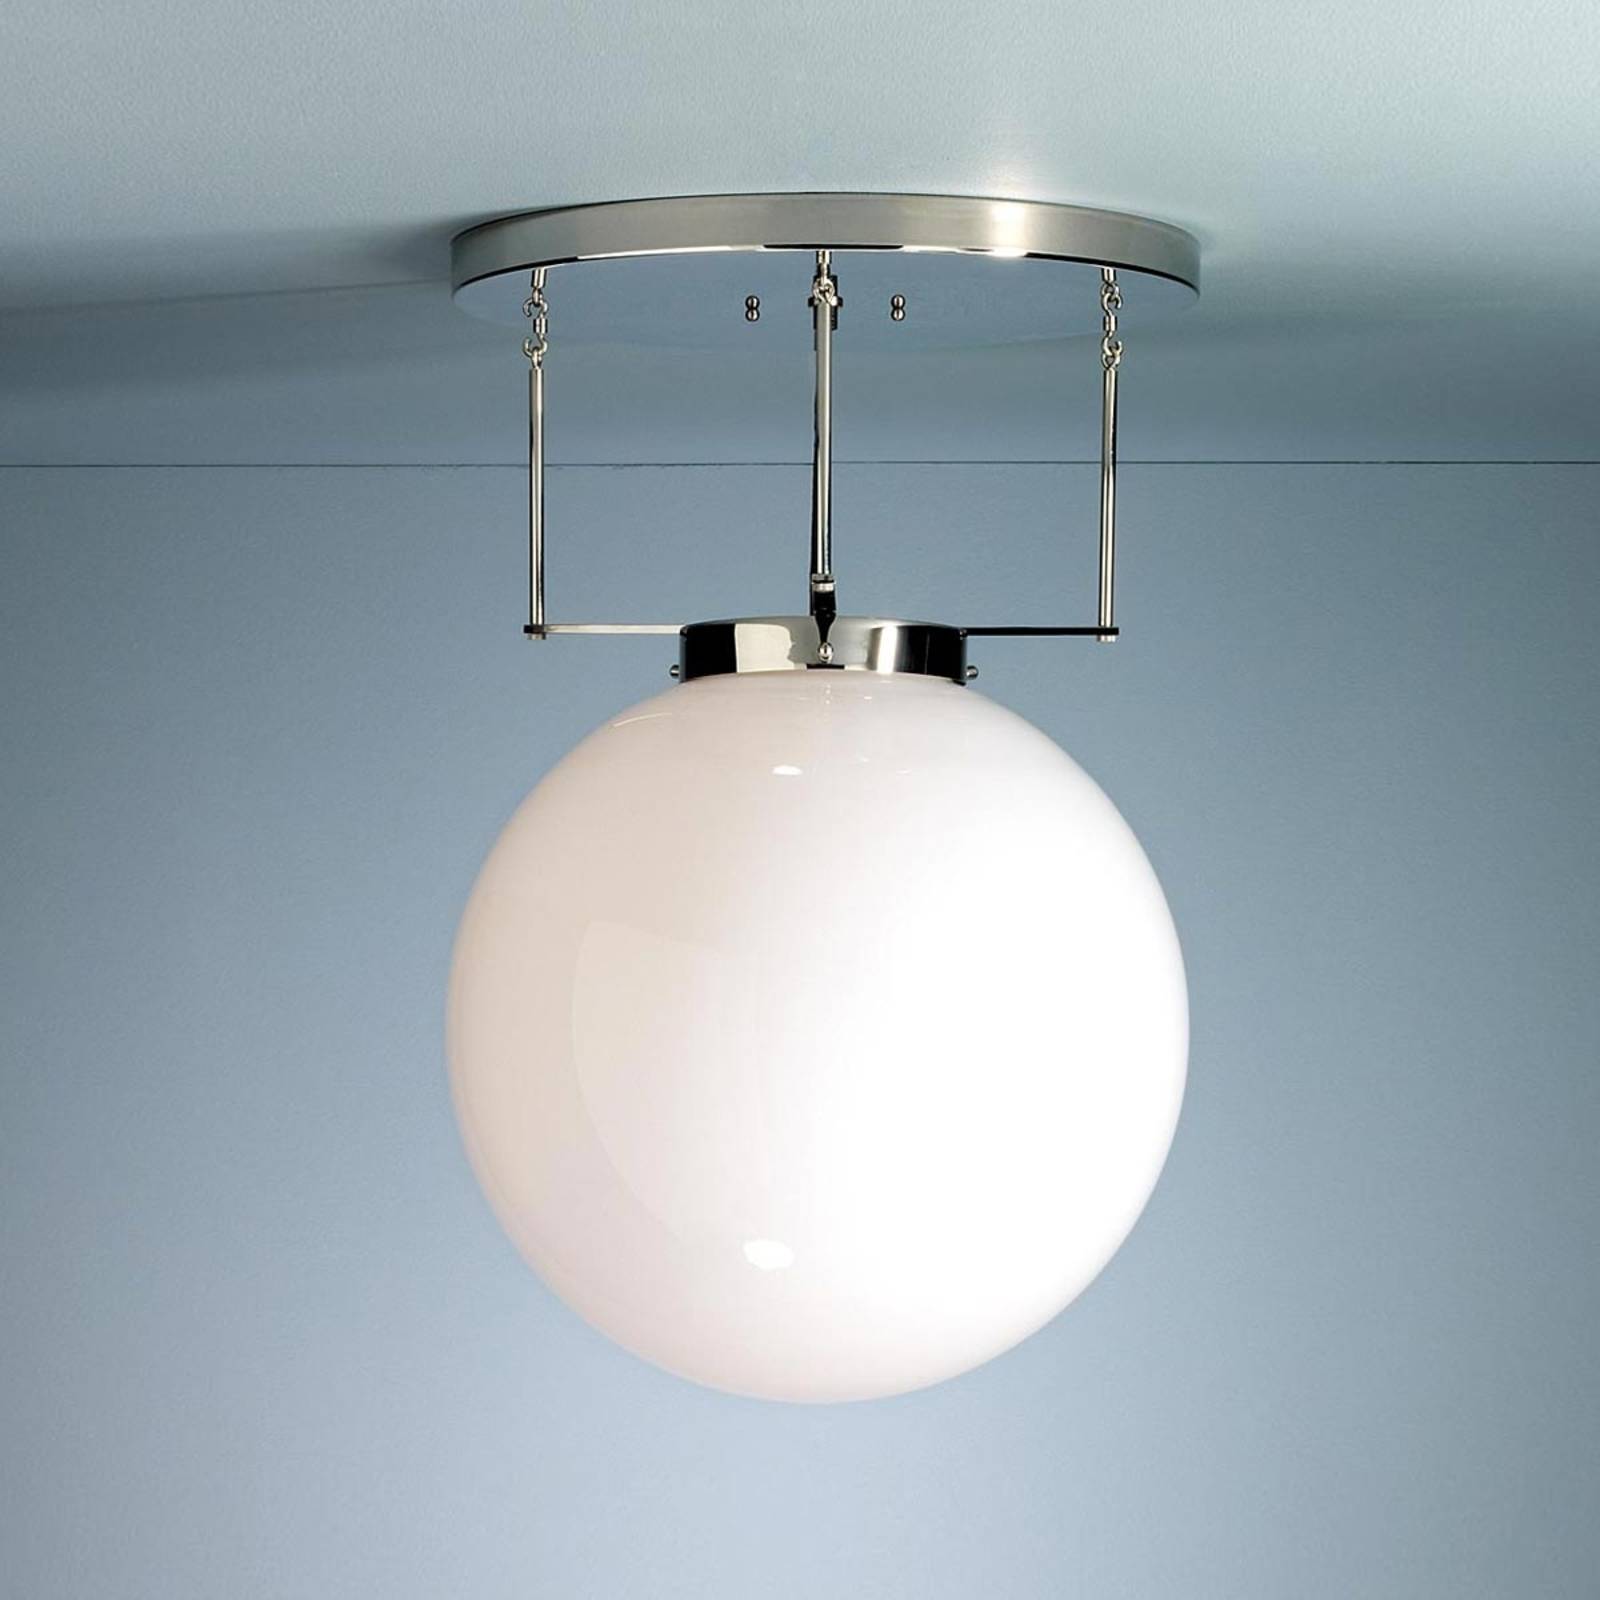 Lampa sufitowa Brandt w stylu Bauhaus 35 cm nikiel